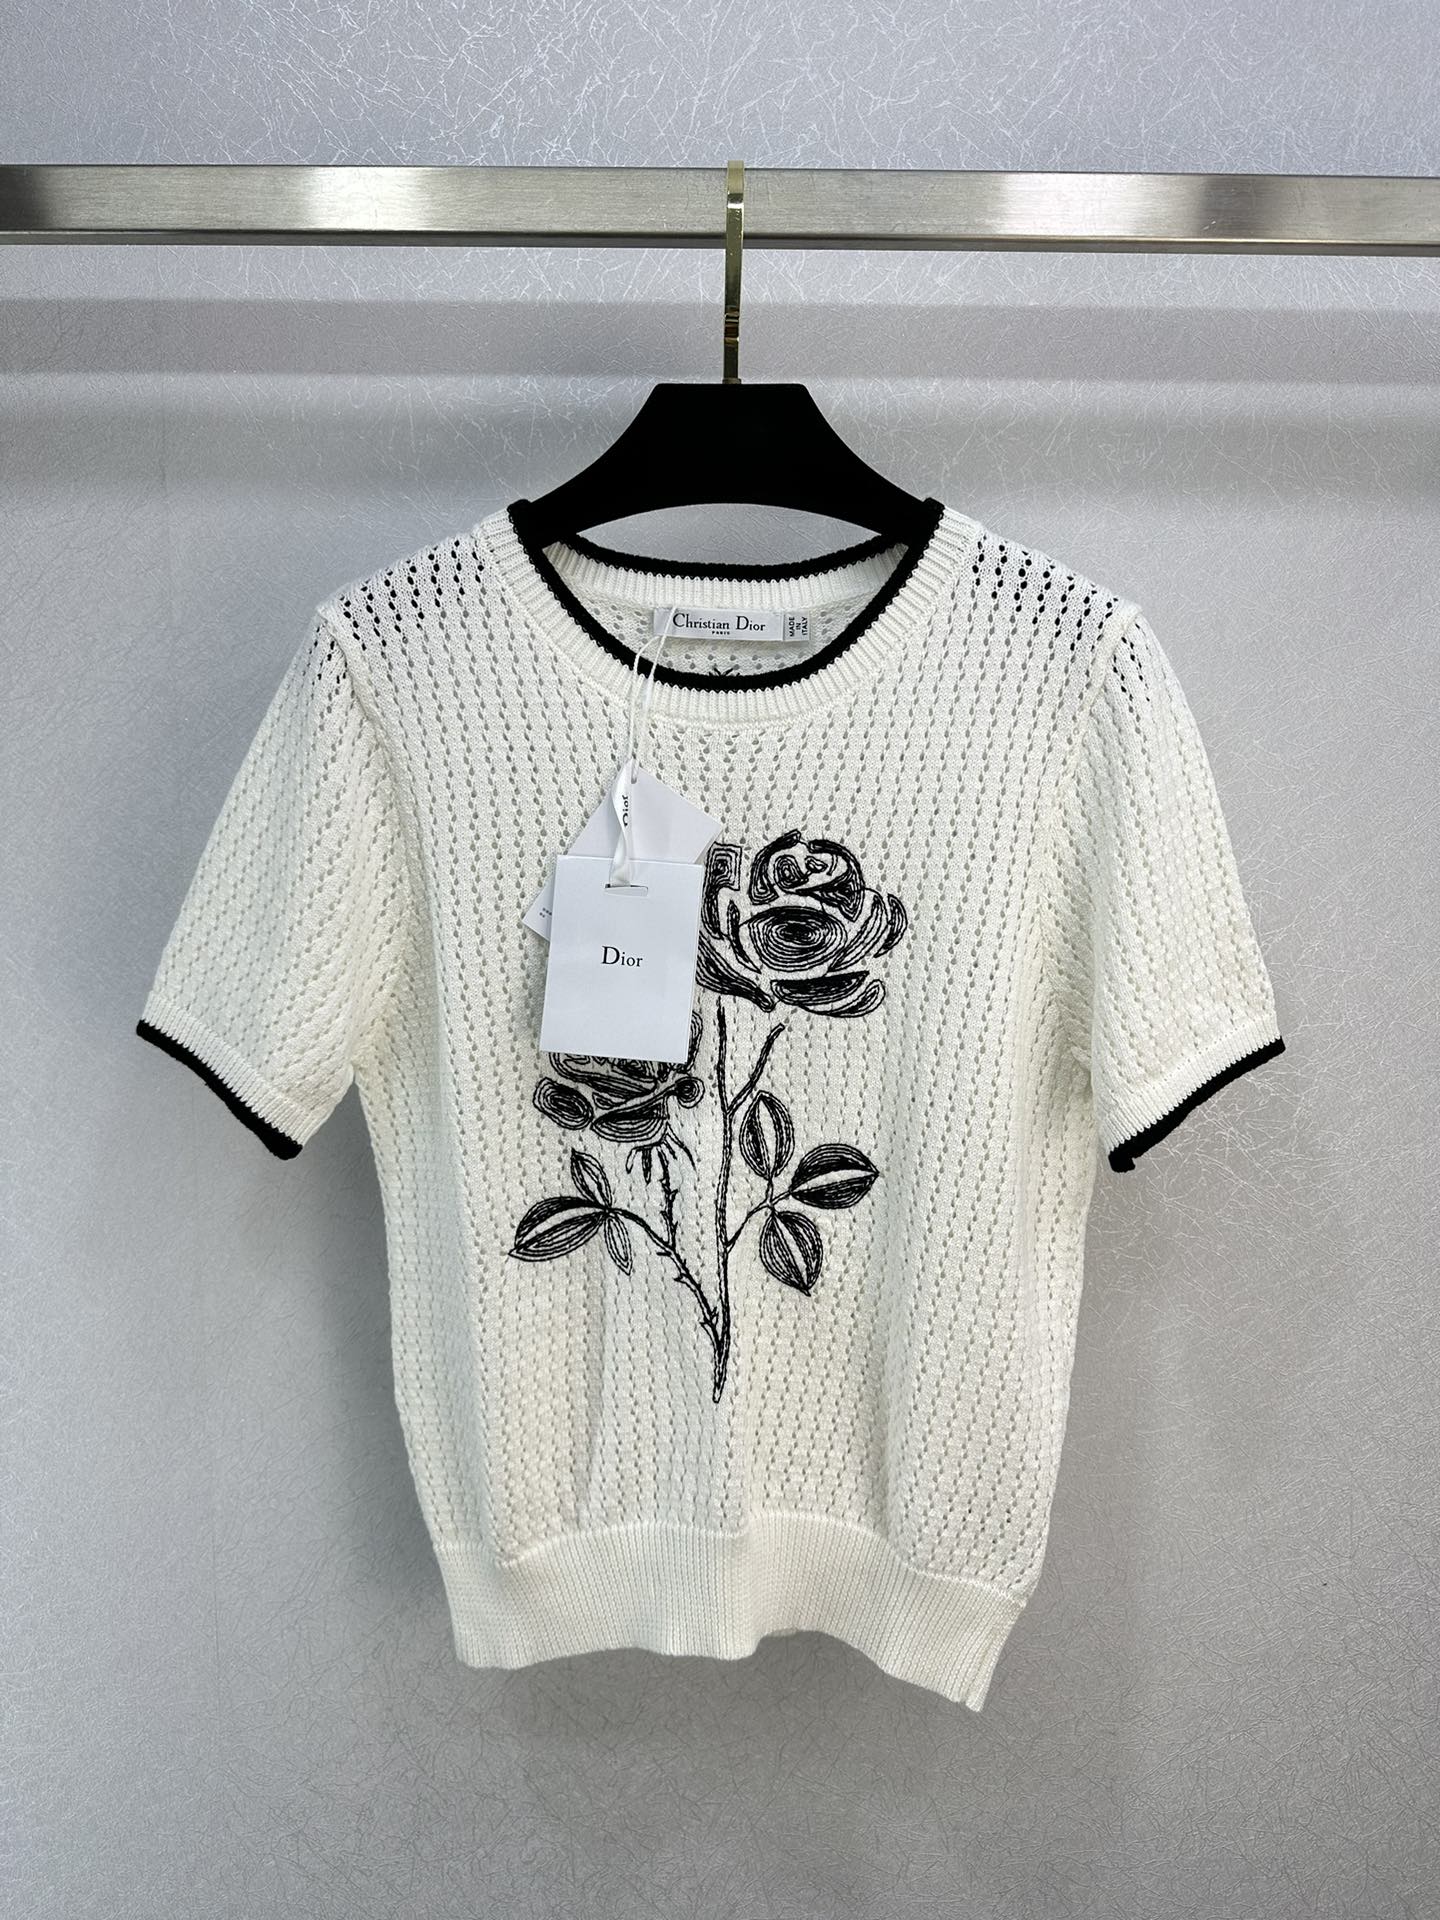 Online From China Designer
 Dior Clothing Shirts & Blouses Black Rose Knitting